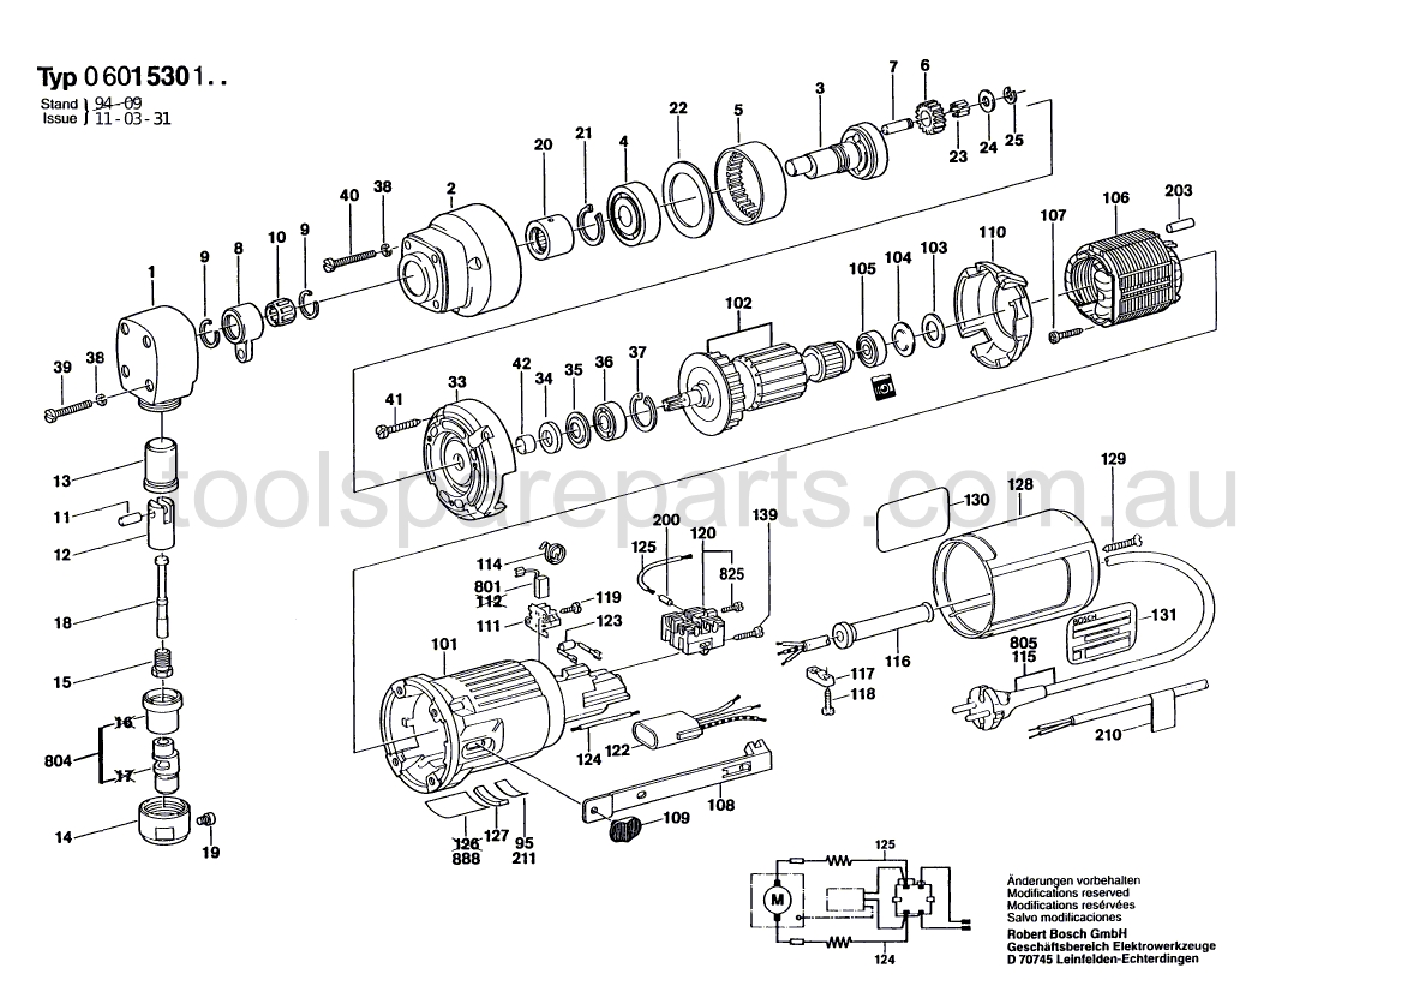 Bosch GNA 2.0 0601530137  Diagram 1